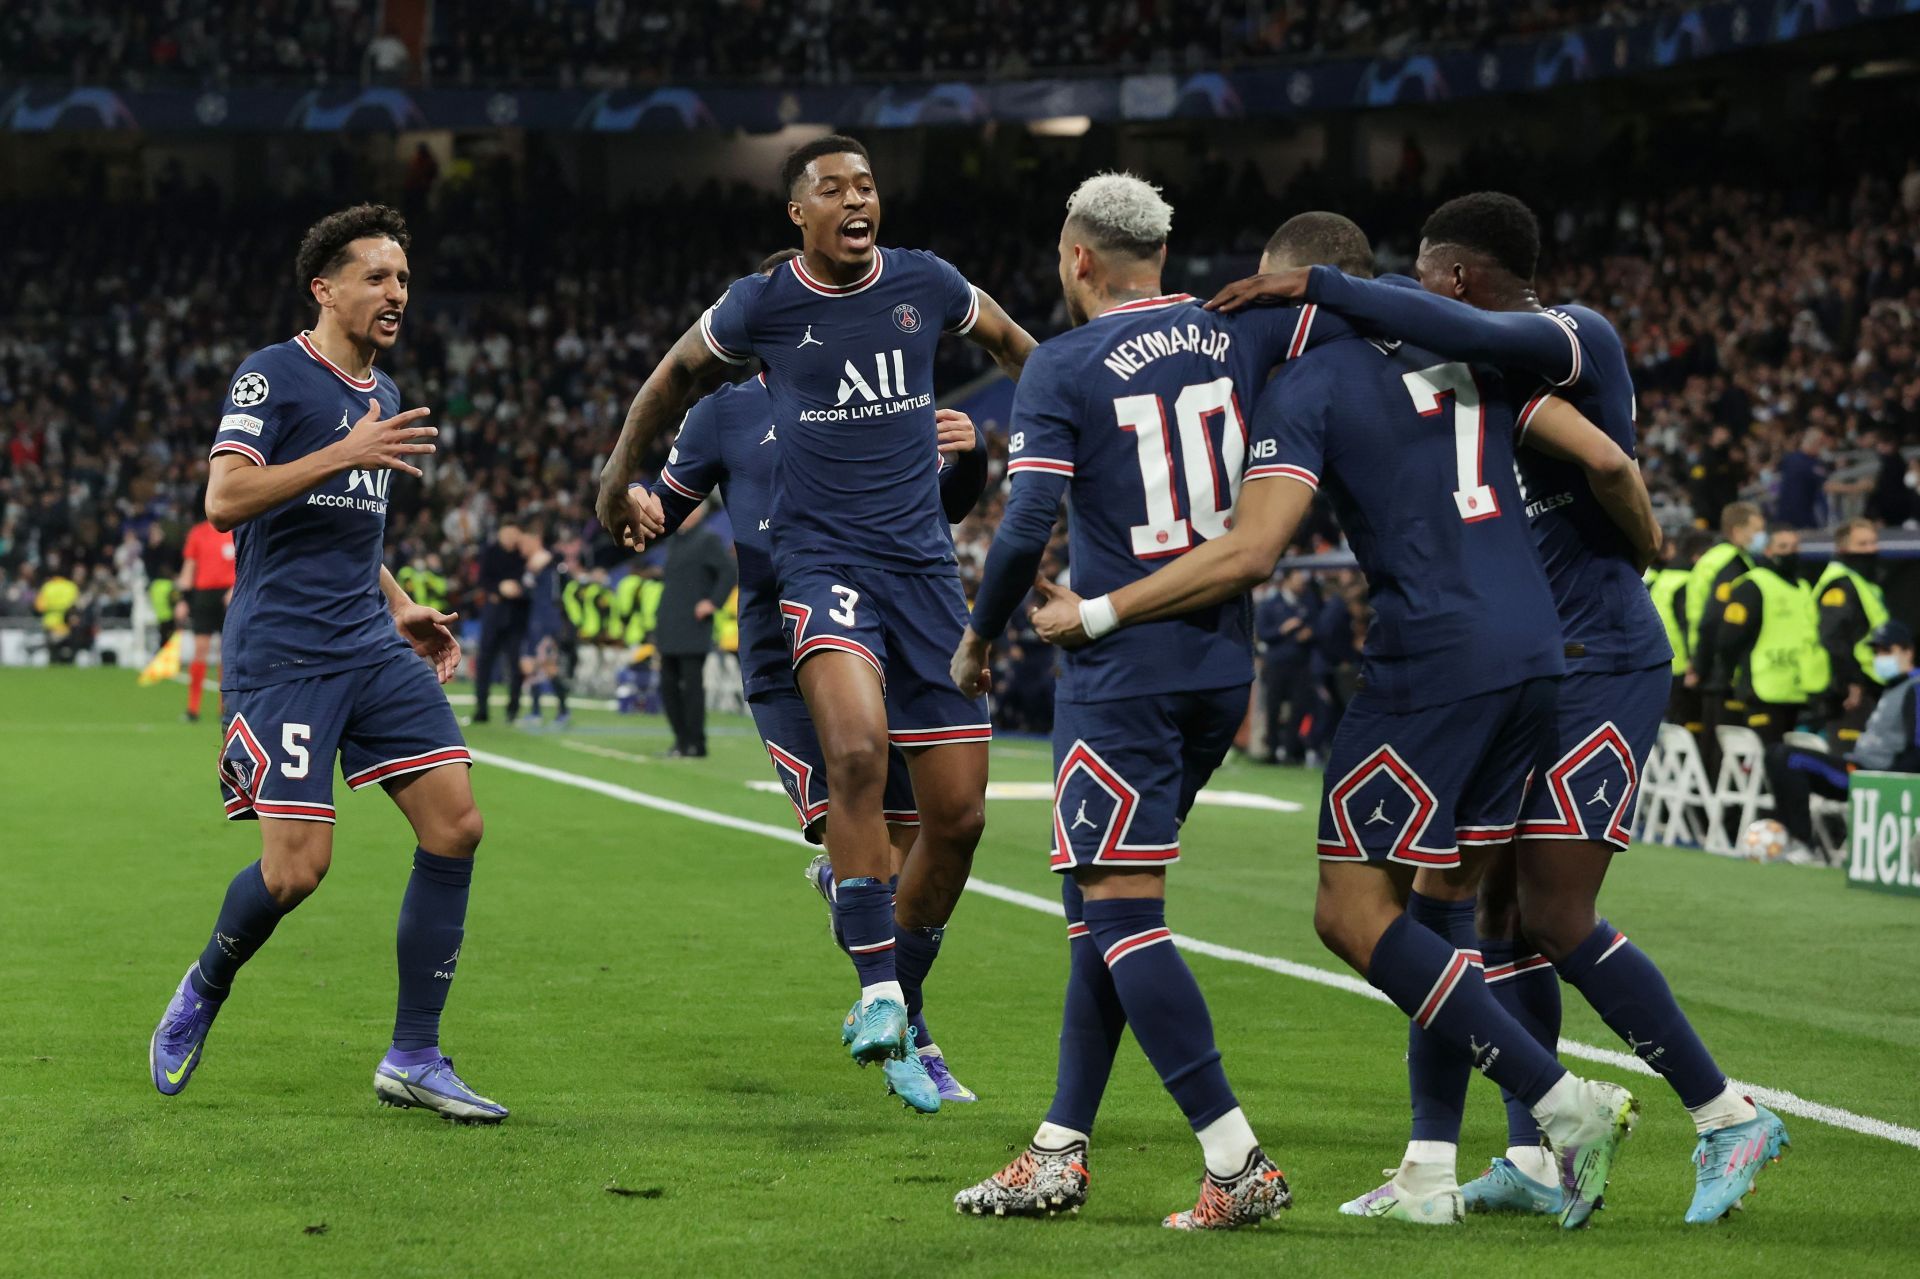 Paris Saint-Germain play Bordeaux on Sunday